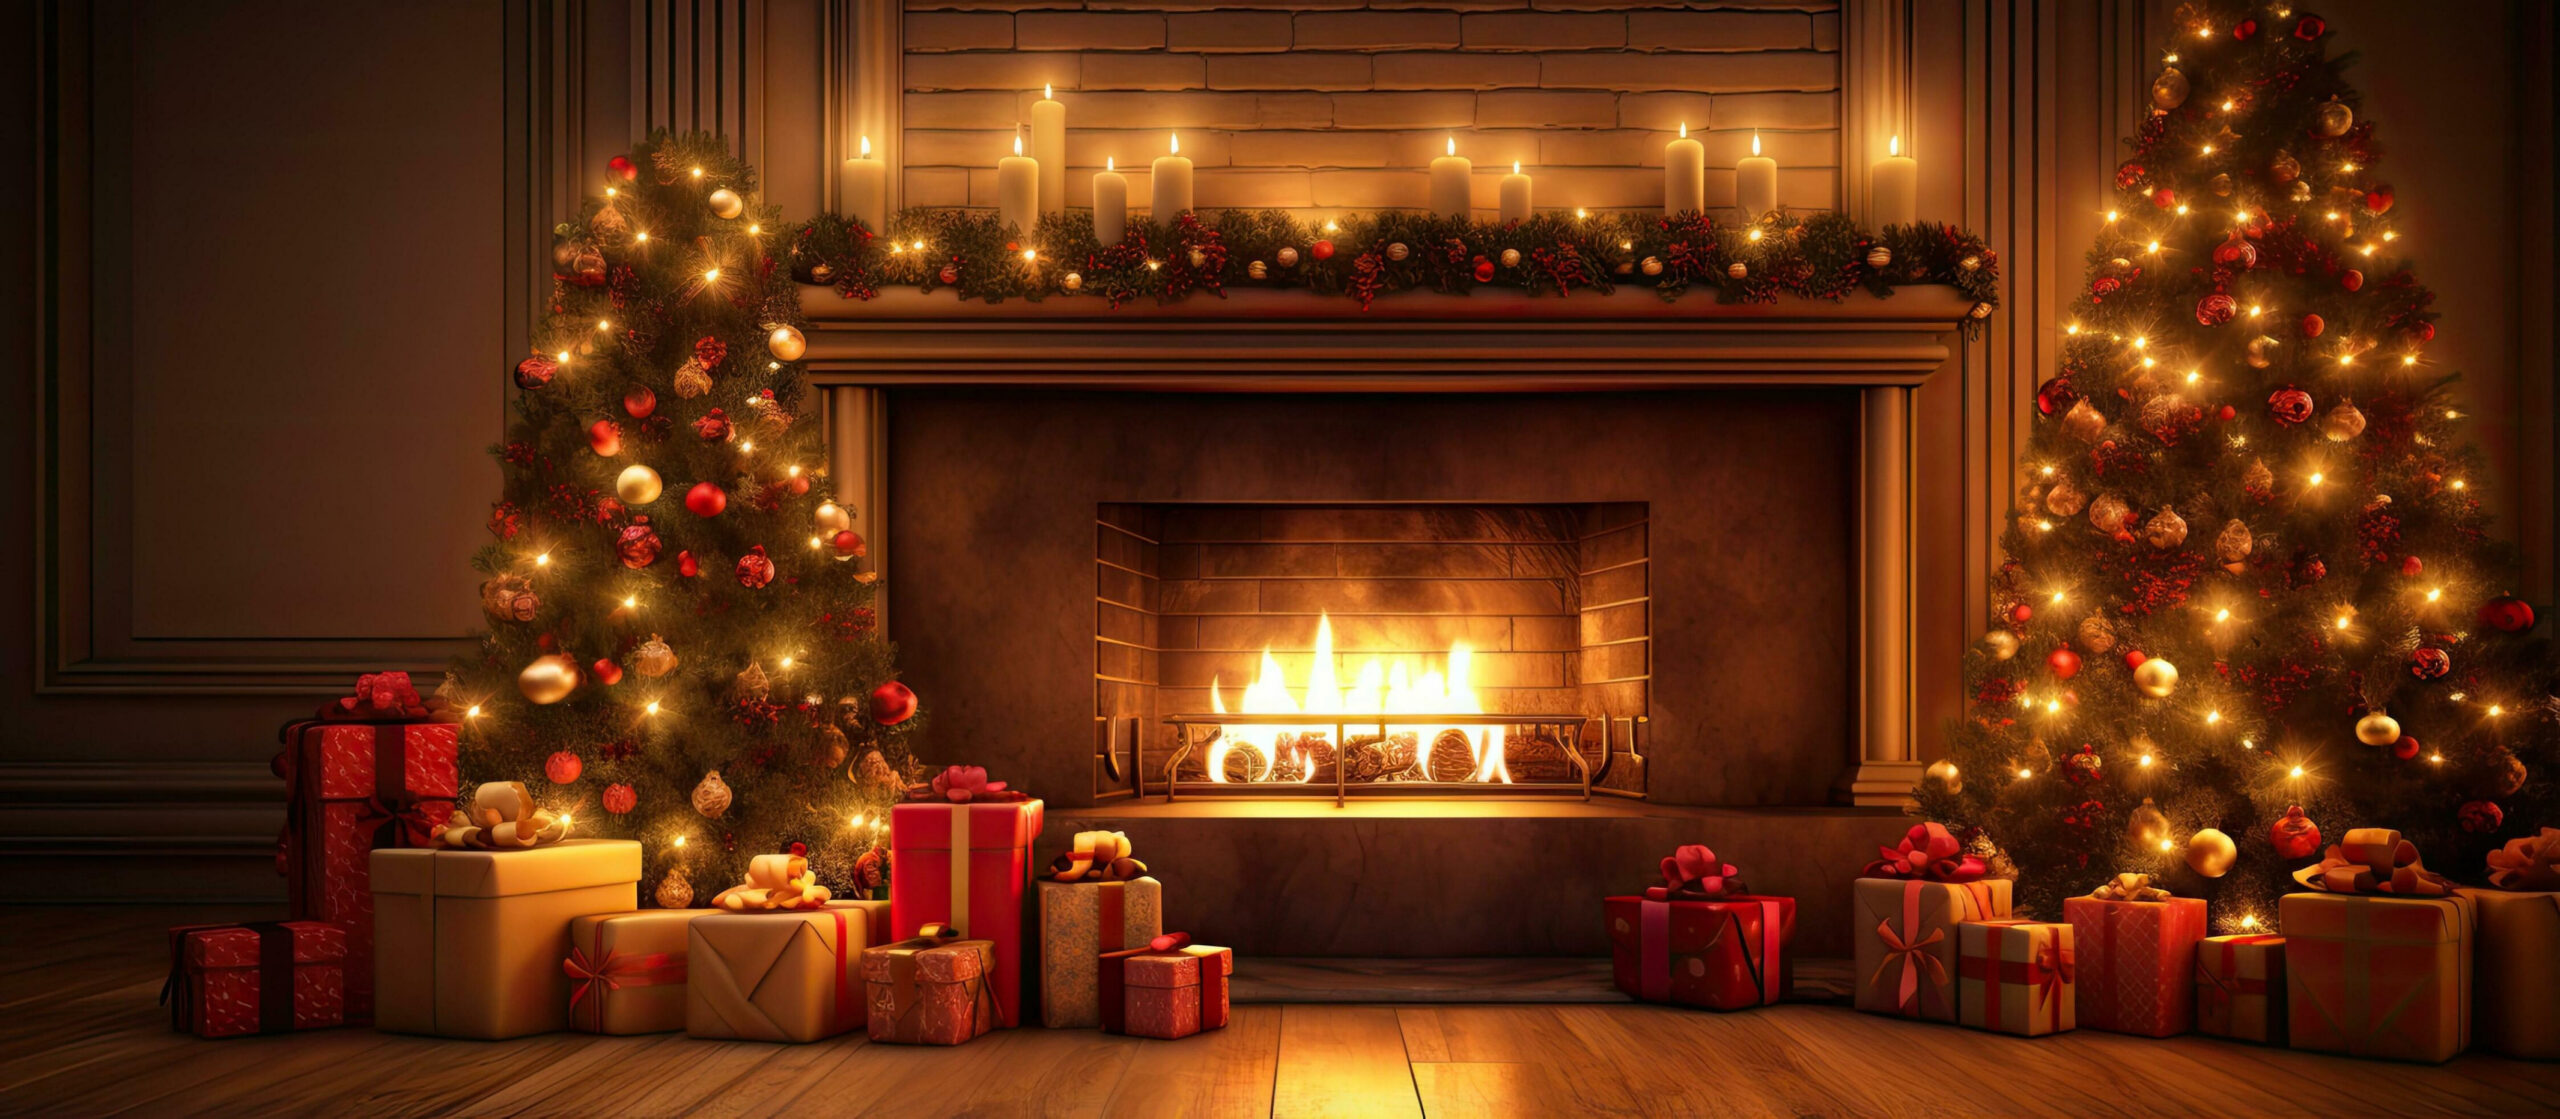 Digital illustration of Merry Christmas background showcasing gift